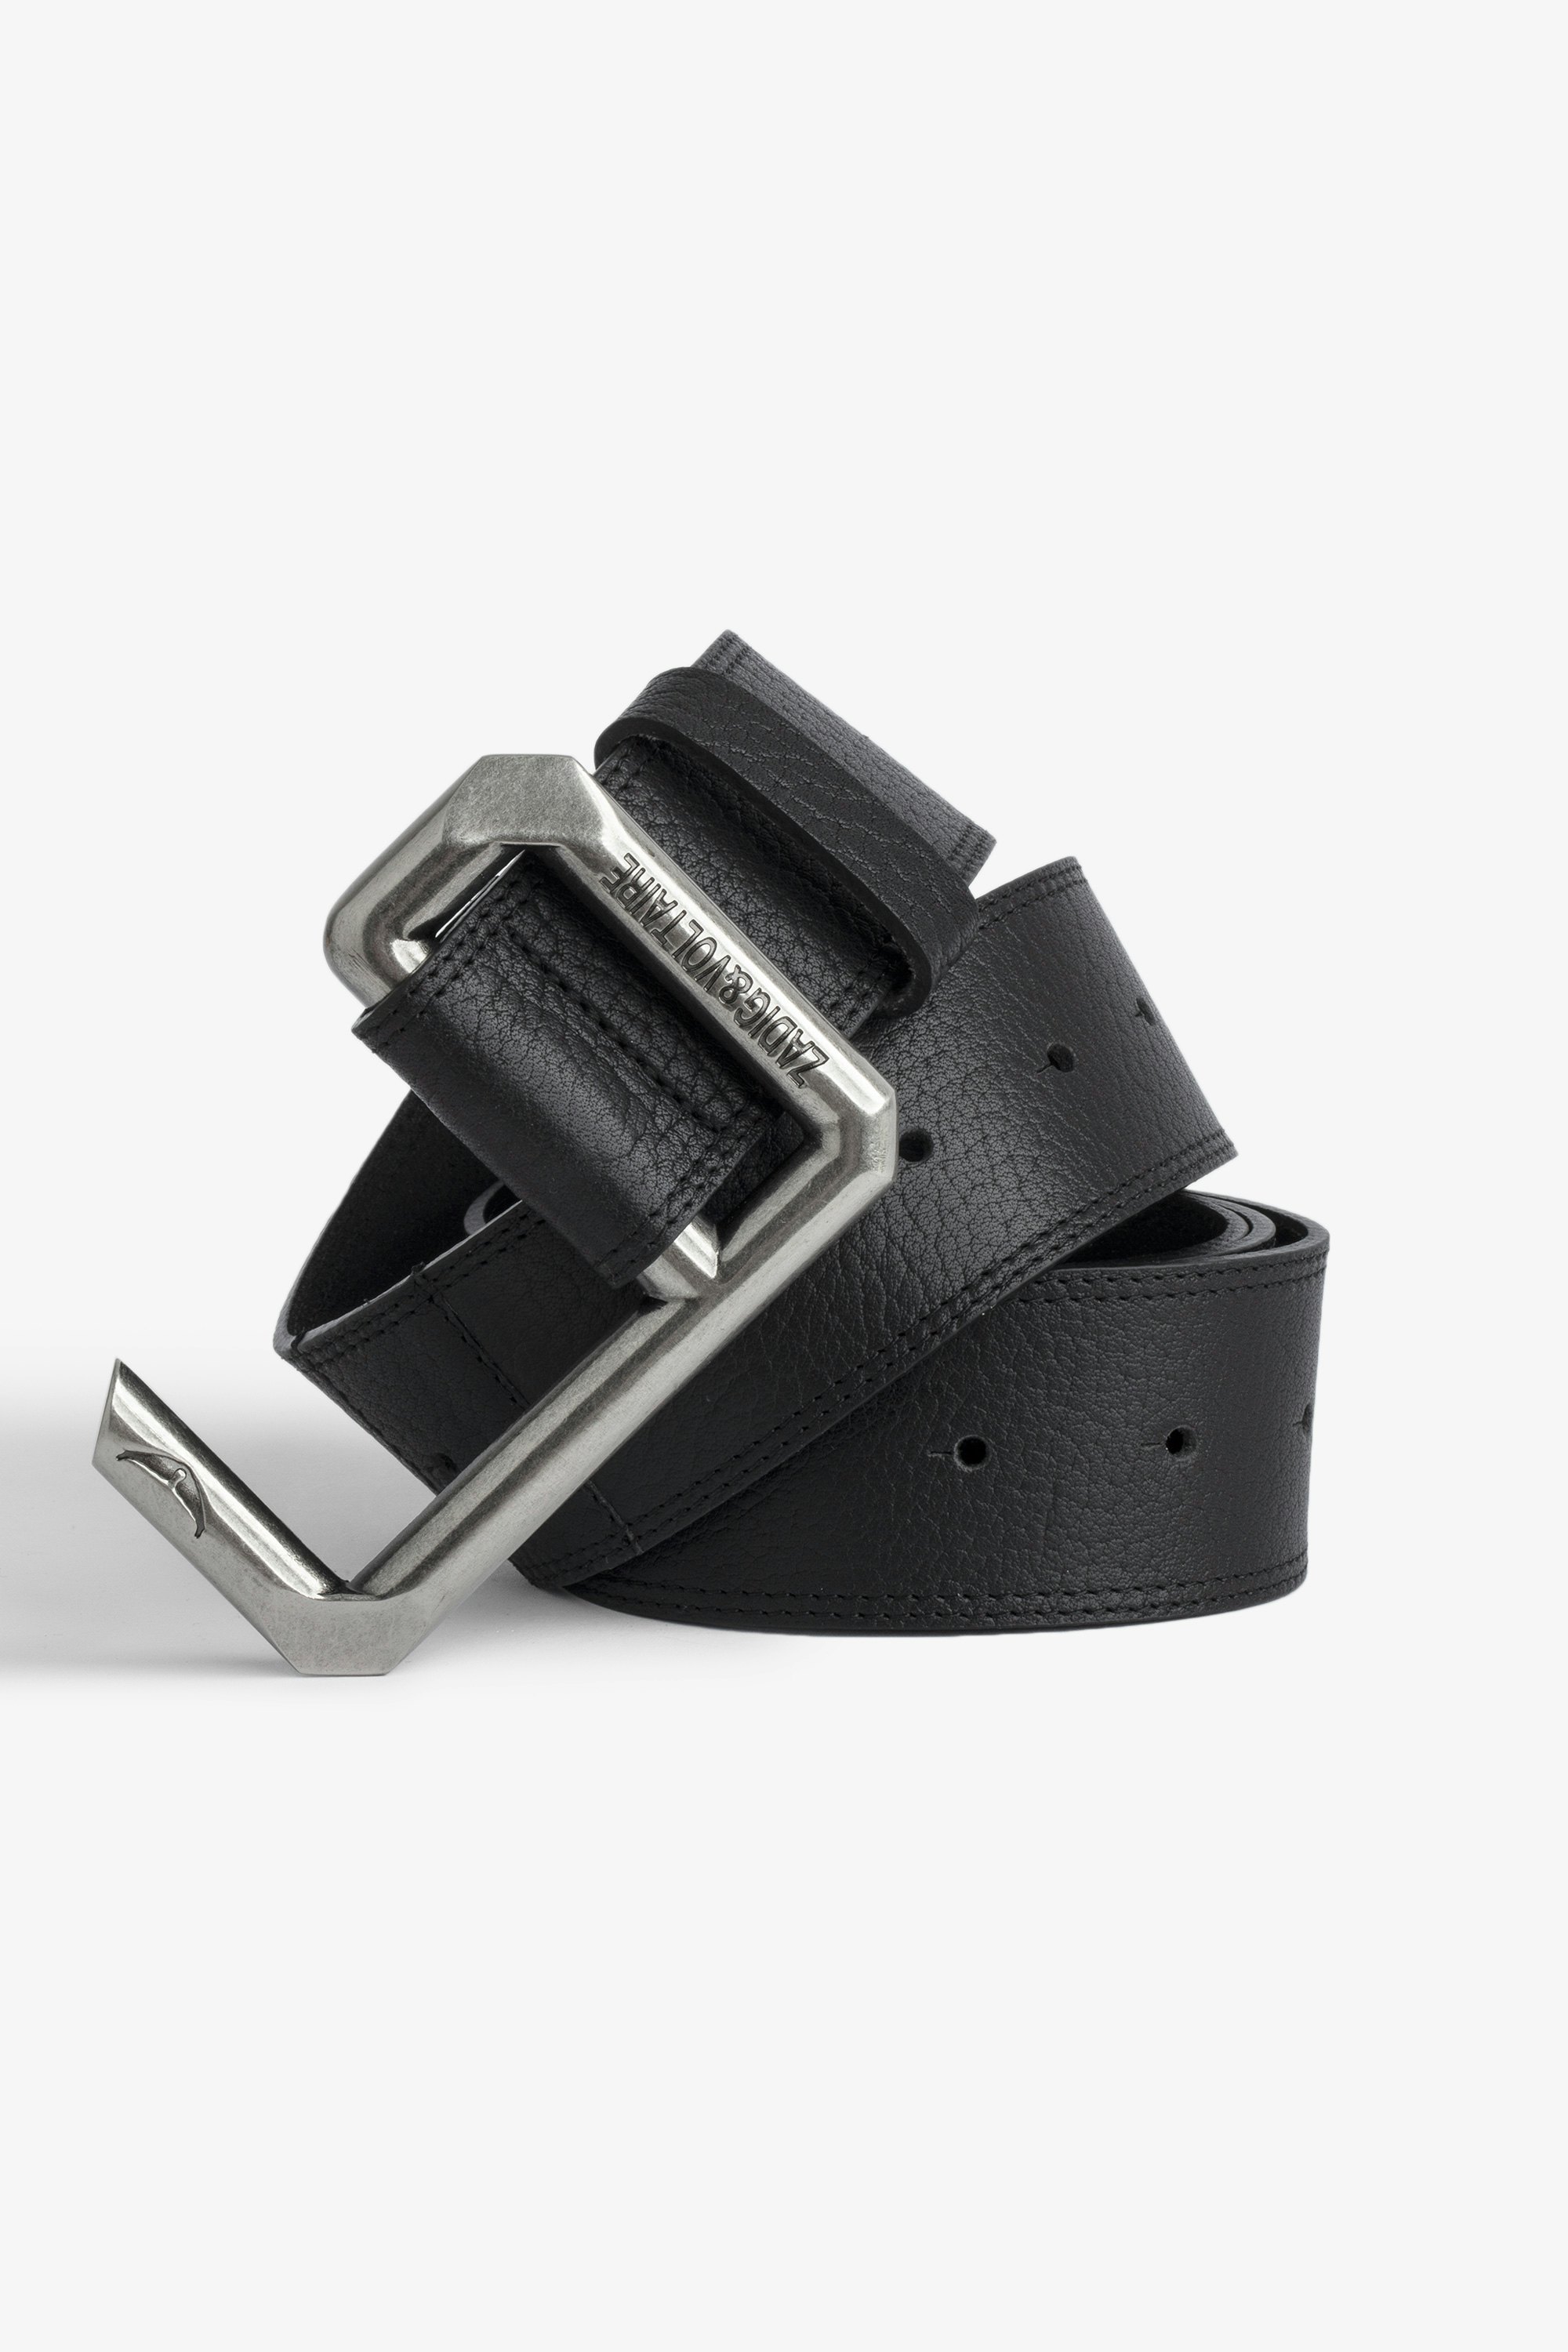 La Cecilia 5 mm ベルト Women's adjustable black leather belt with C-shaped buckle